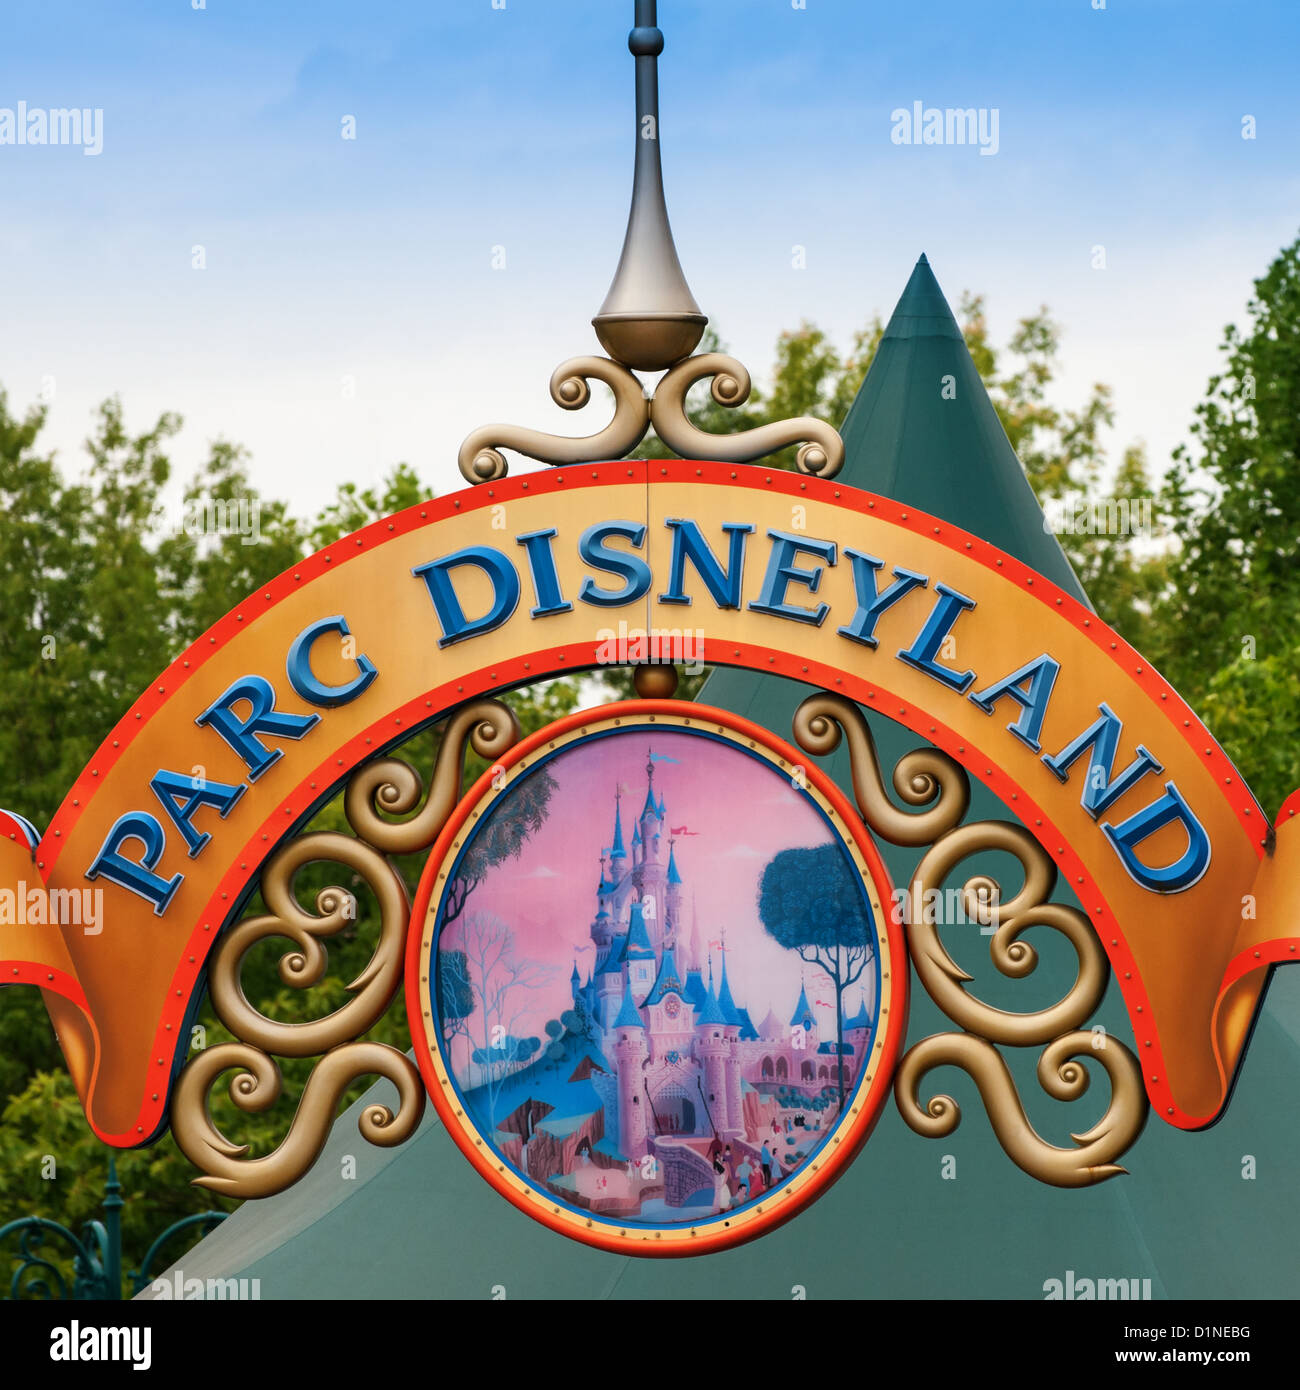 Disneyland Park Paris France - Parc Disneyland Stock Photo - Alamy